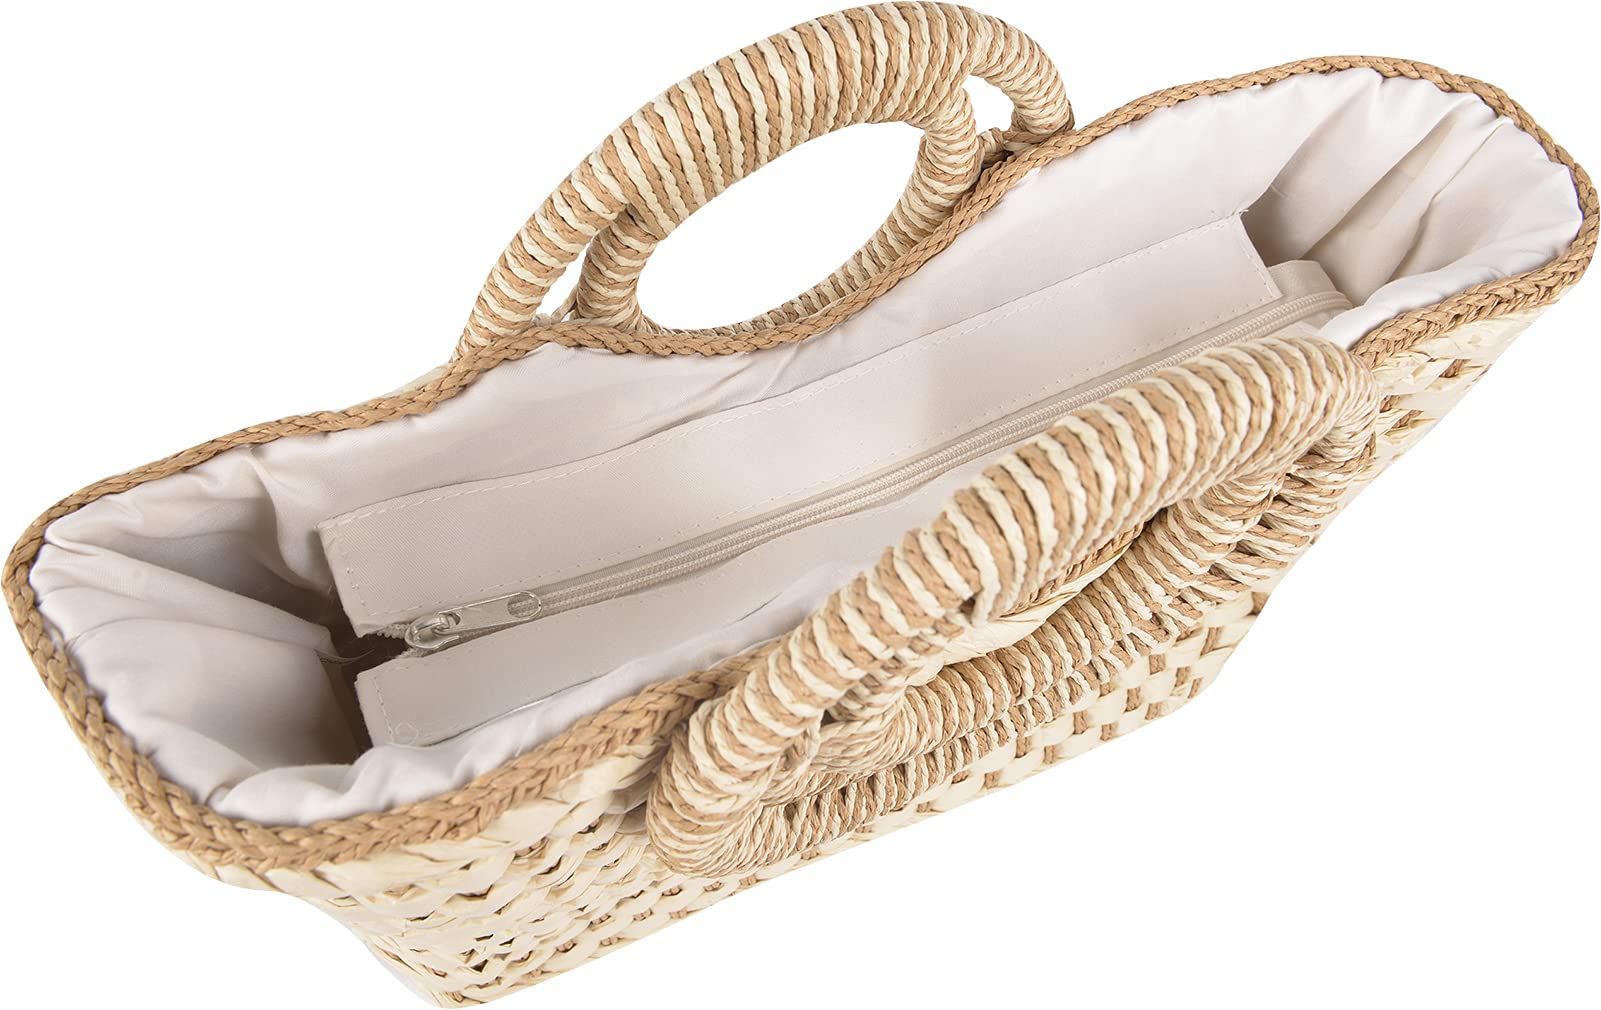 QZUnique Hand-woven Straw Bag Women Summer Beach Handbag Purse Retro Rattan Tote Clutch Travel Bag with Wood Round Top Handle